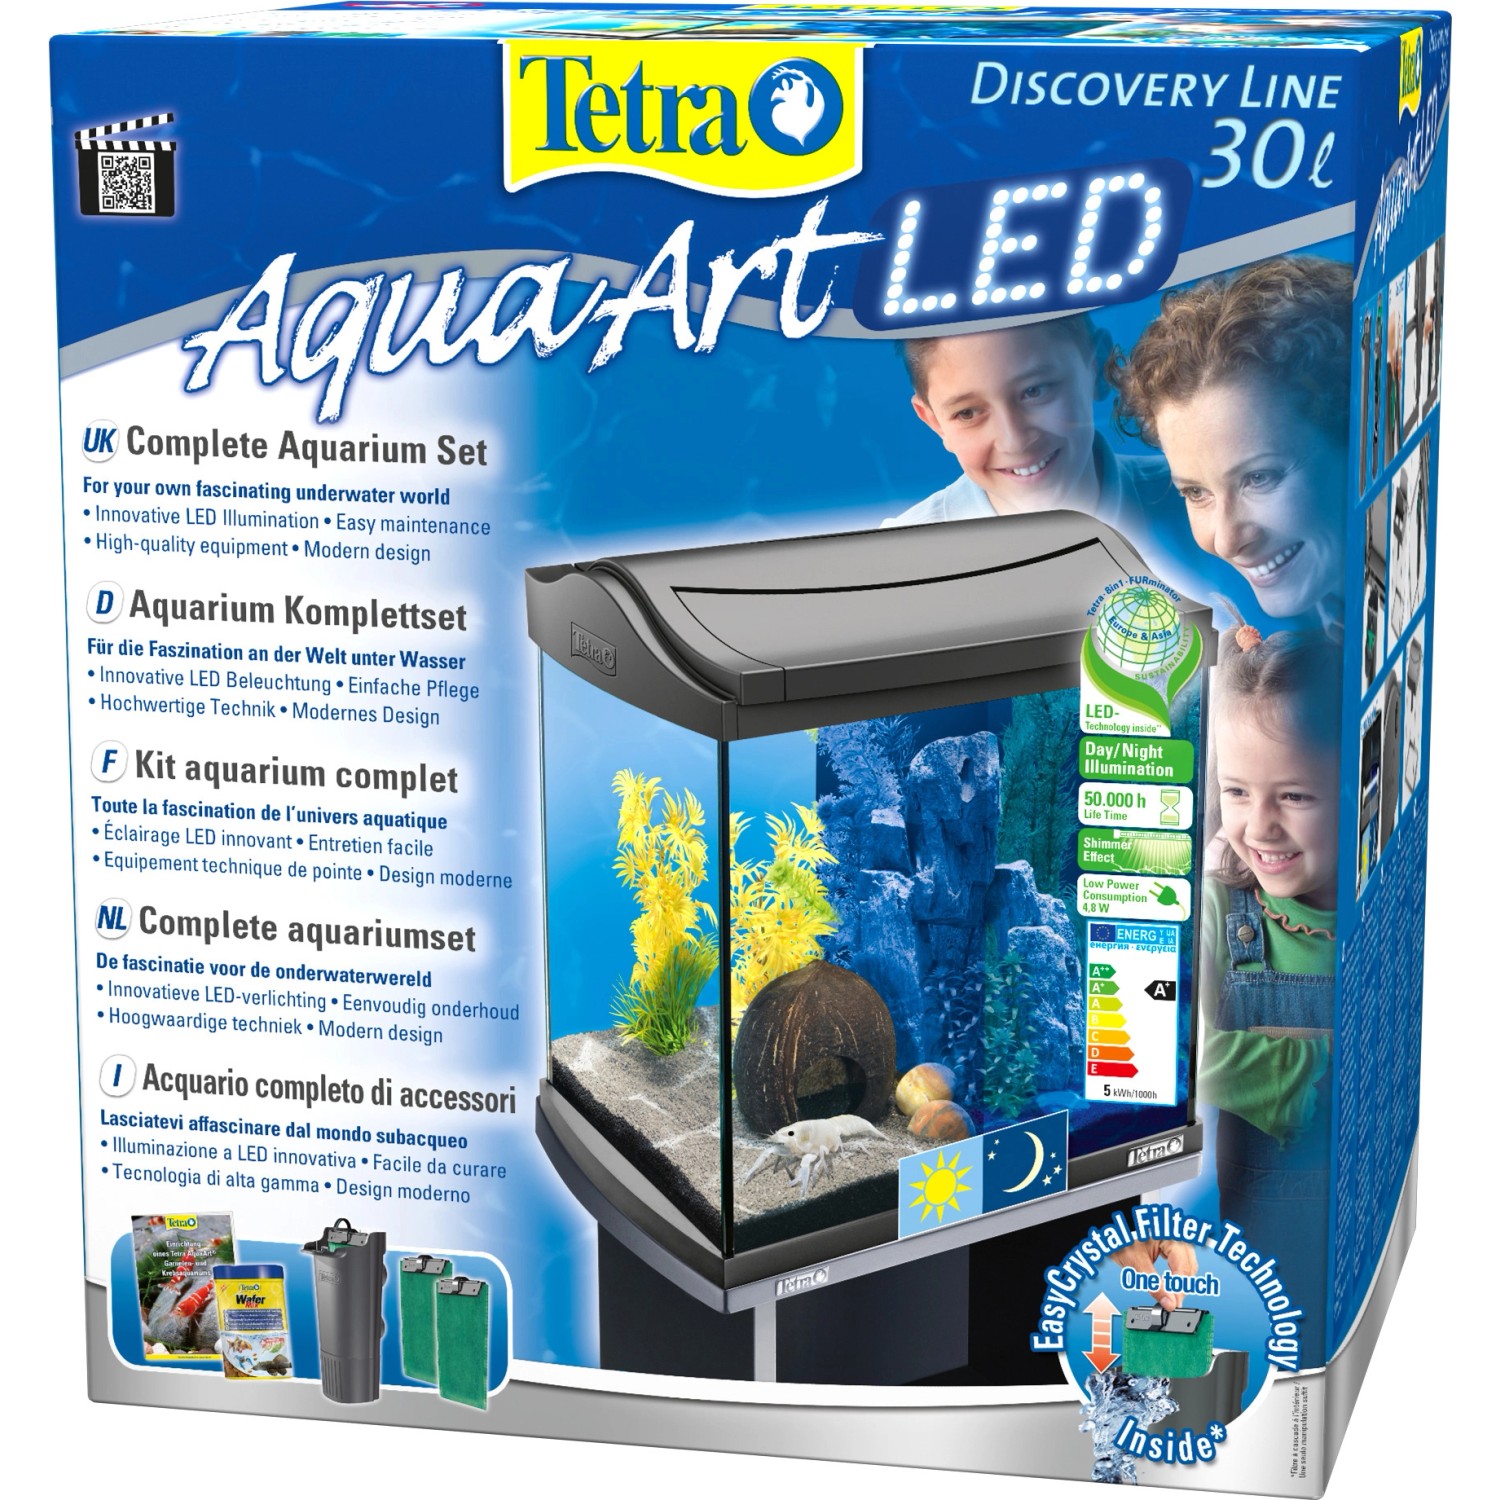 Tetra Aquarium-Set AquaArt Discovery OBI kaufen Anthrazit LED l Line bei 30